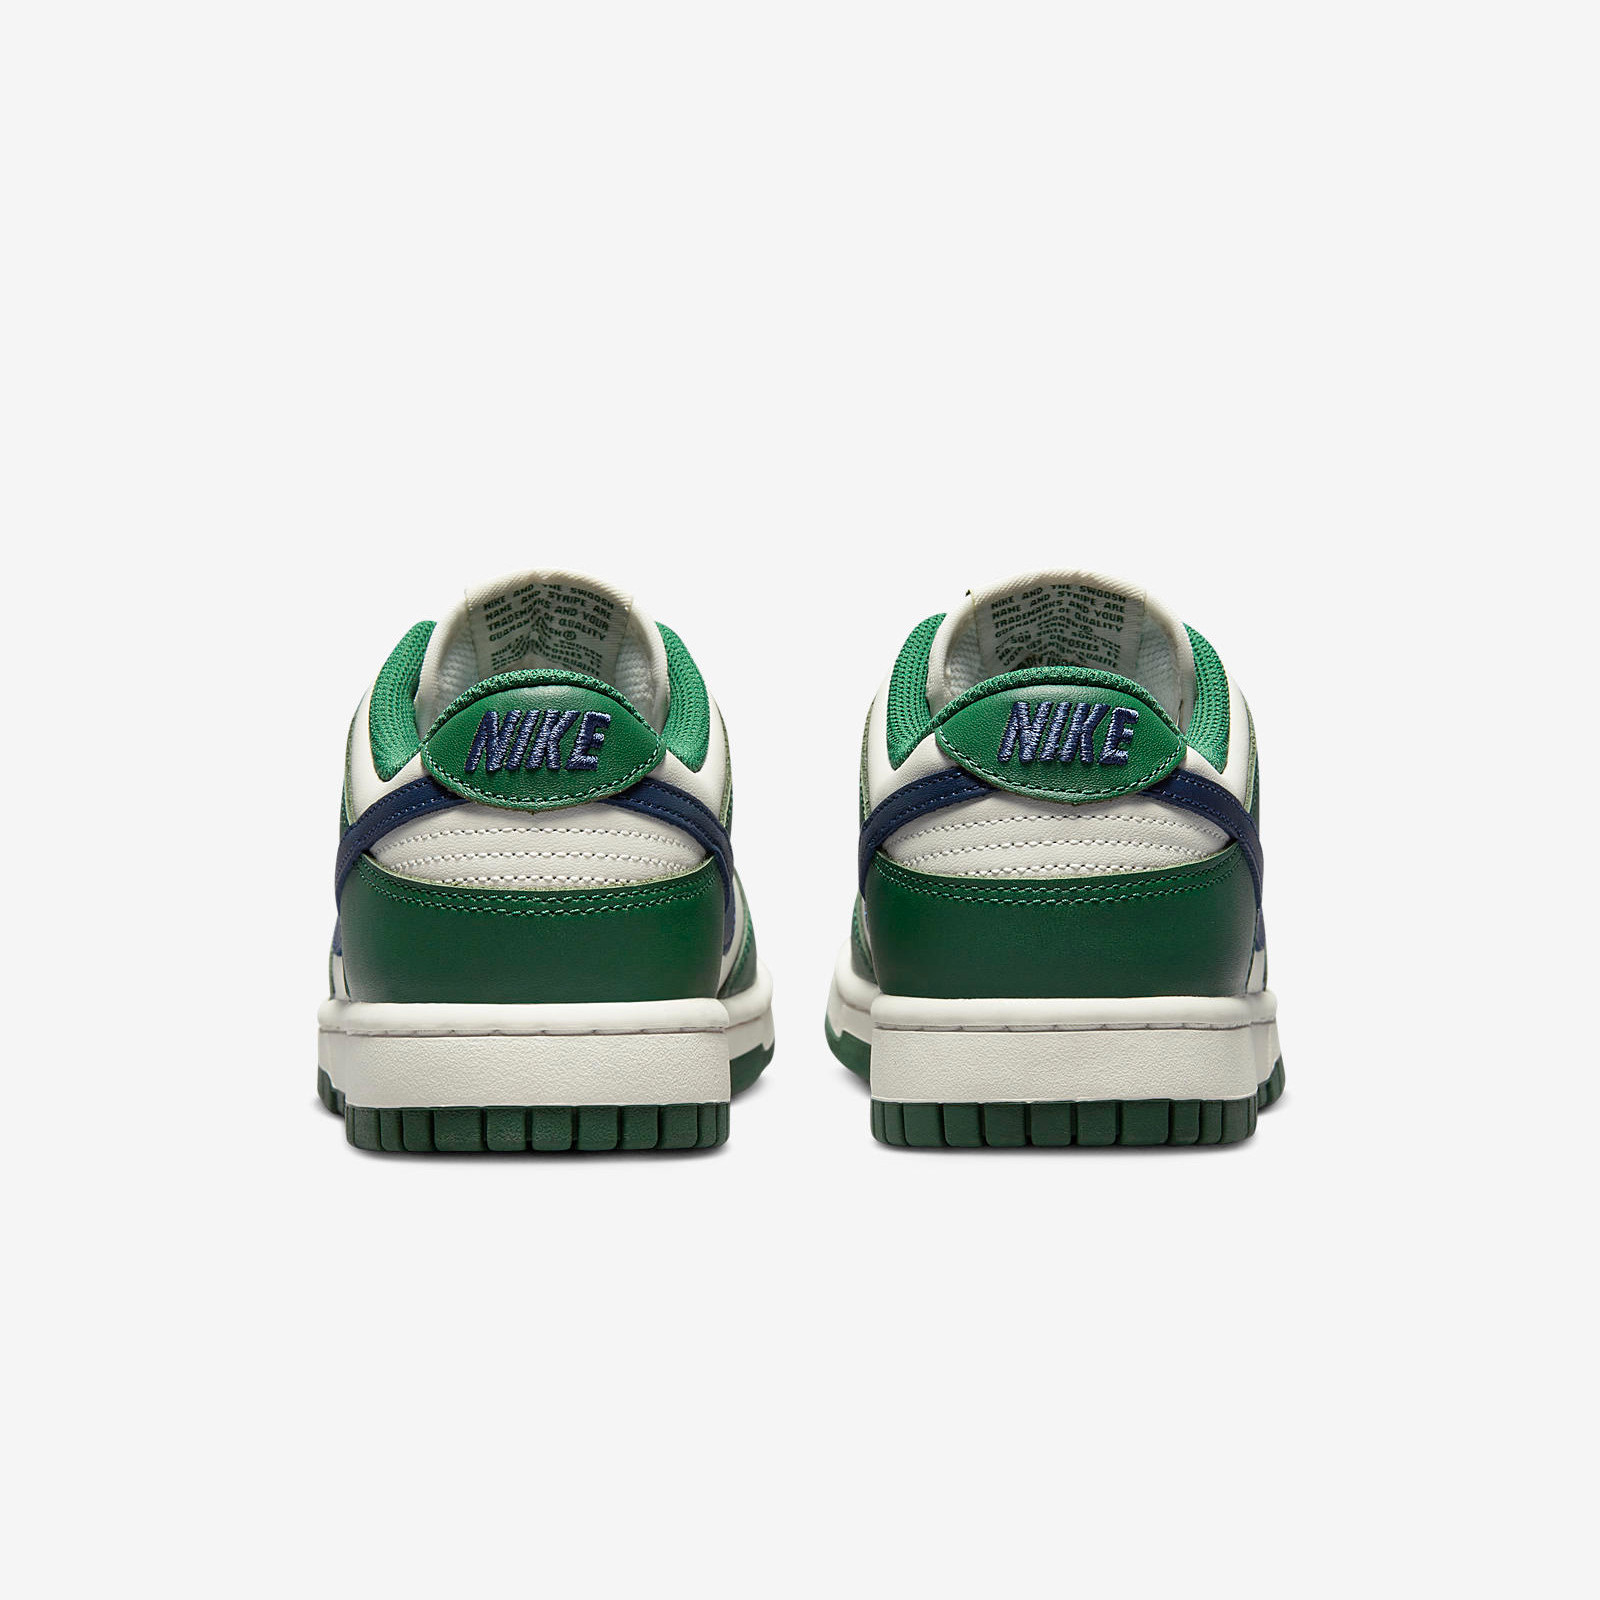 Nike Dunk Low
« Gorge Green »